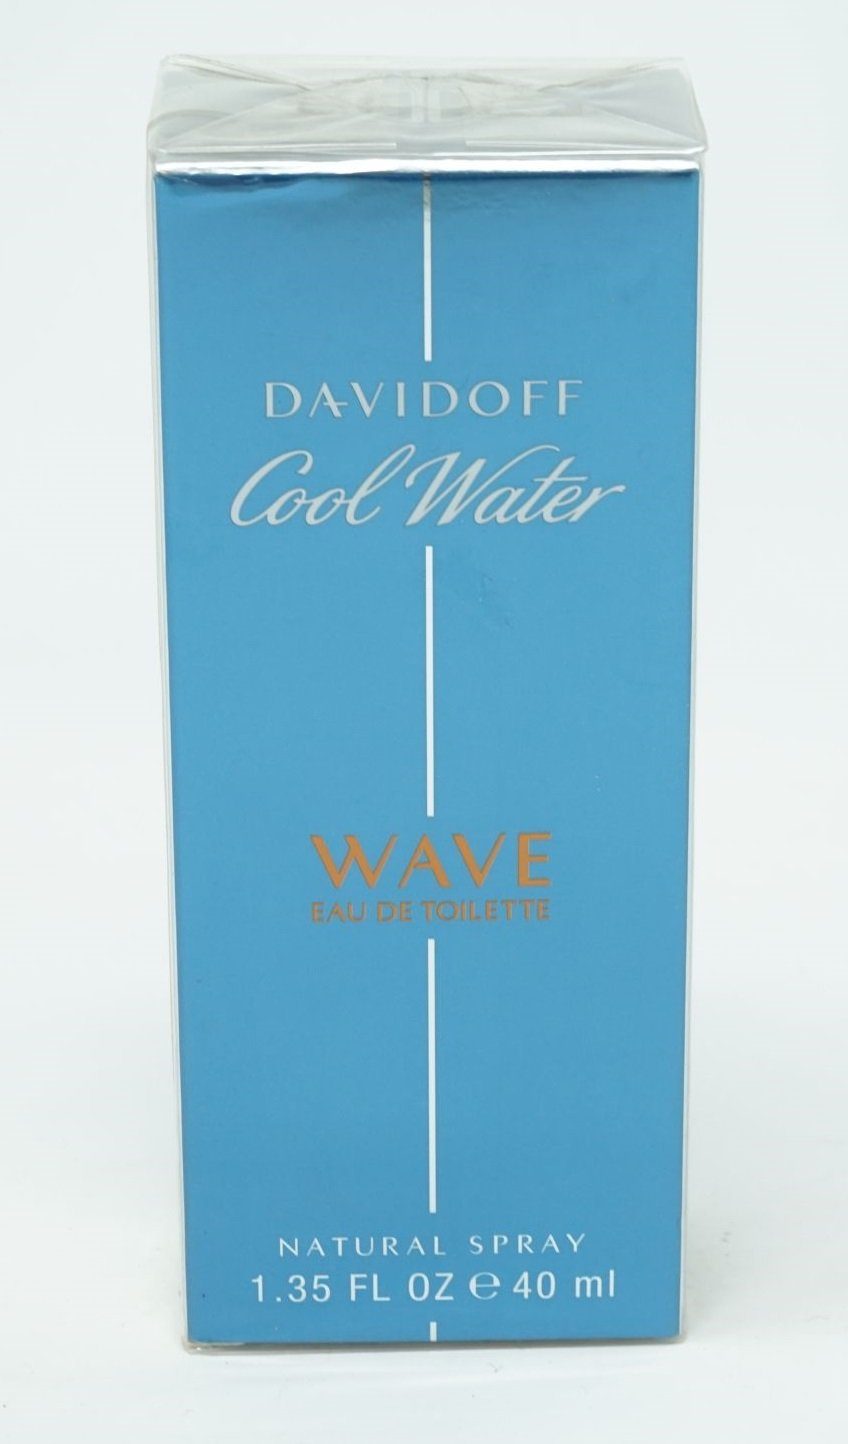 DAVIDOFF Eau de Toilette Davidoff Cool Water Wave Eau de Toilette Spray 40ml